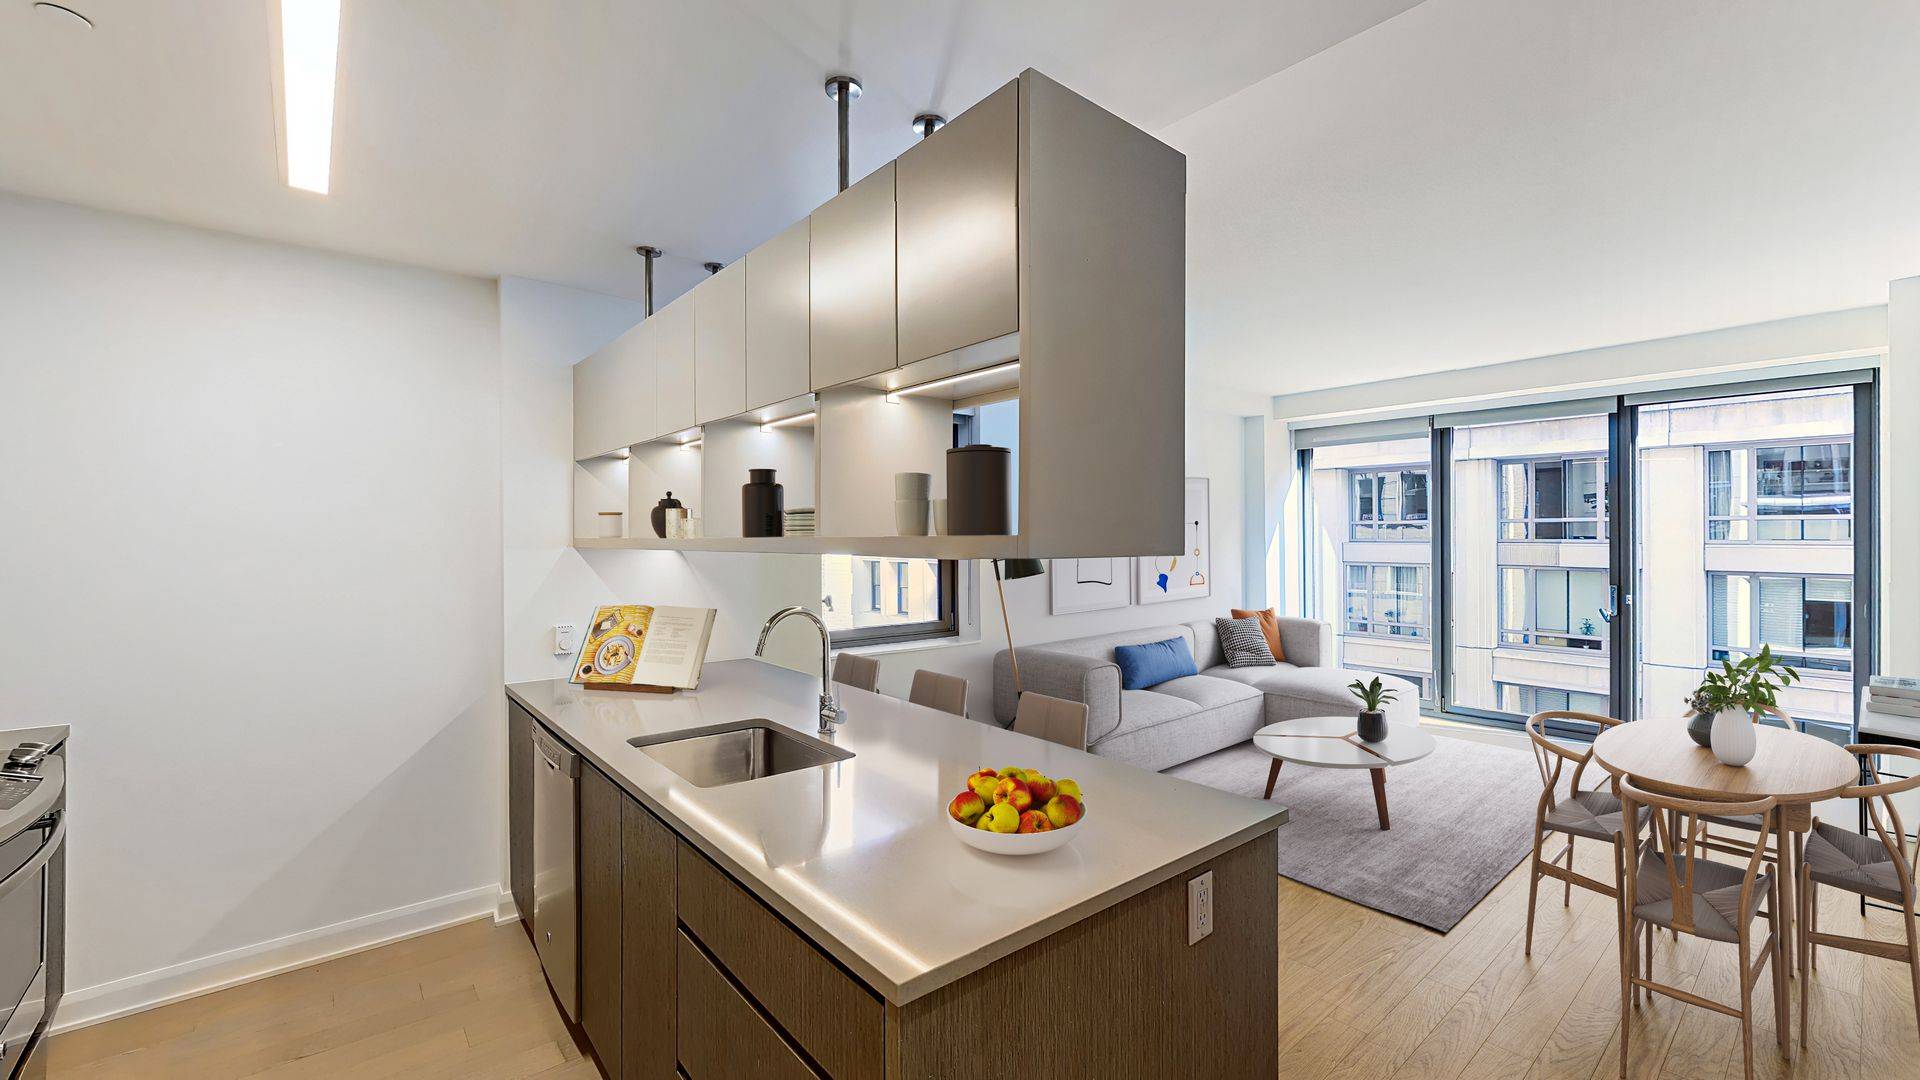 Stunning 1bed Penthouse in Flatiron. 3 Months Free. Bosch W/D In-Unit